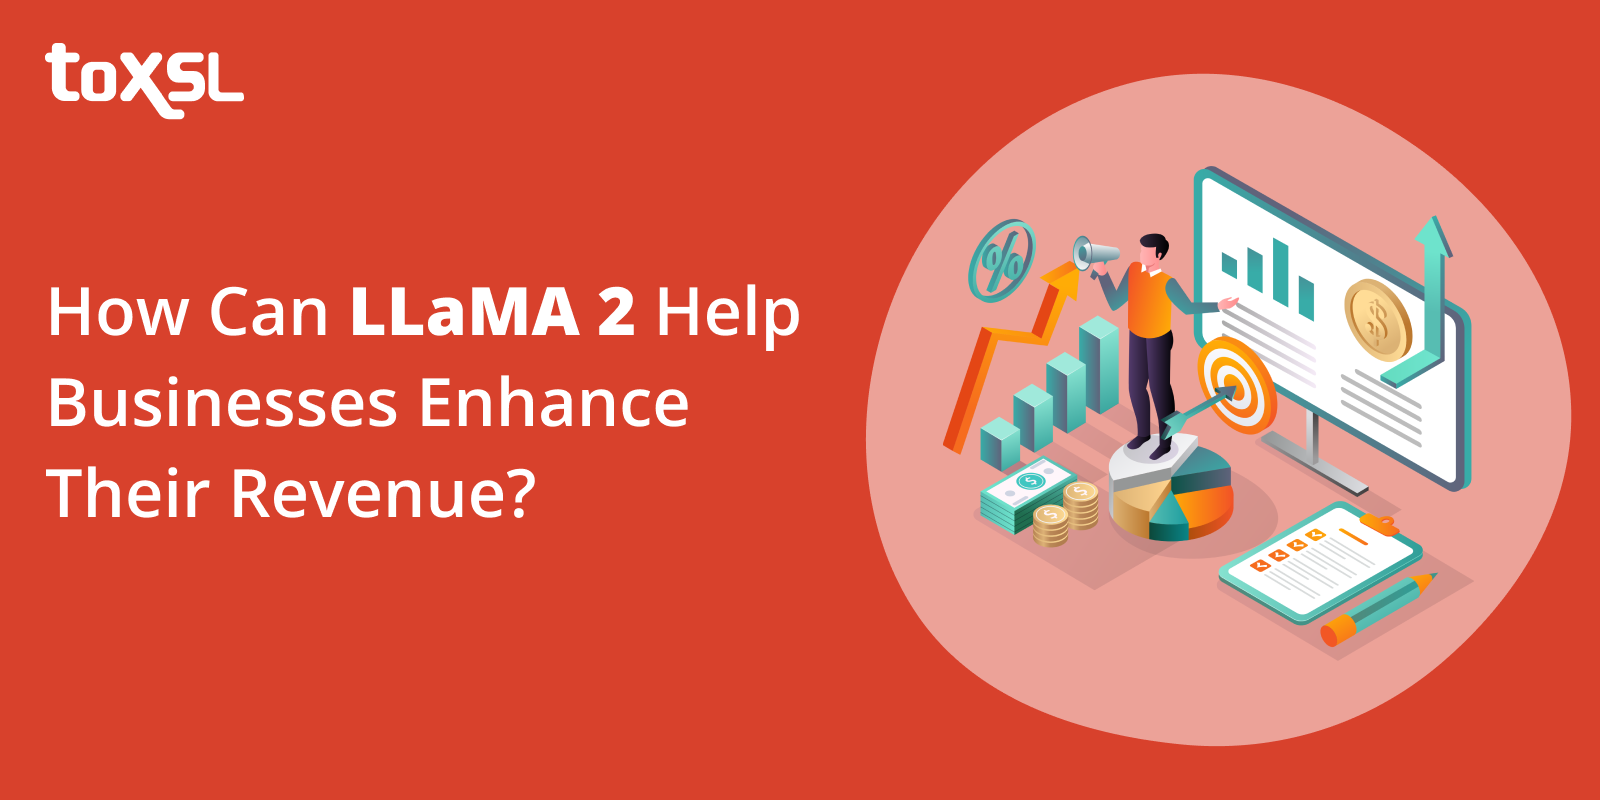 How Can LLaMA 2 Help Businesses Enhance their Revenue?